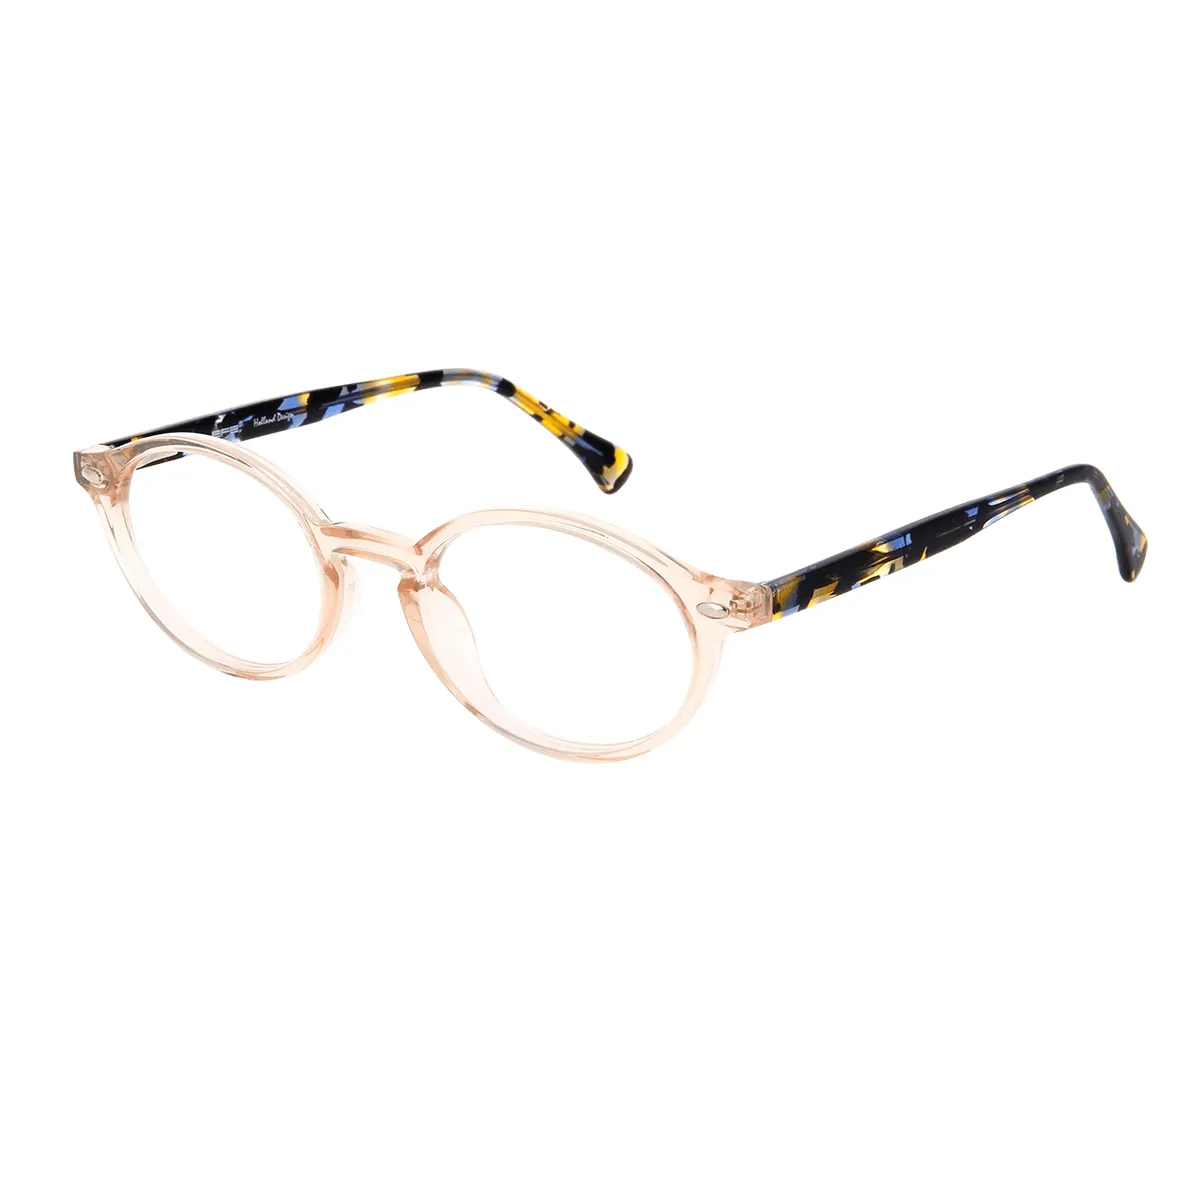 Elijah - Oval Brown Glasses for Women